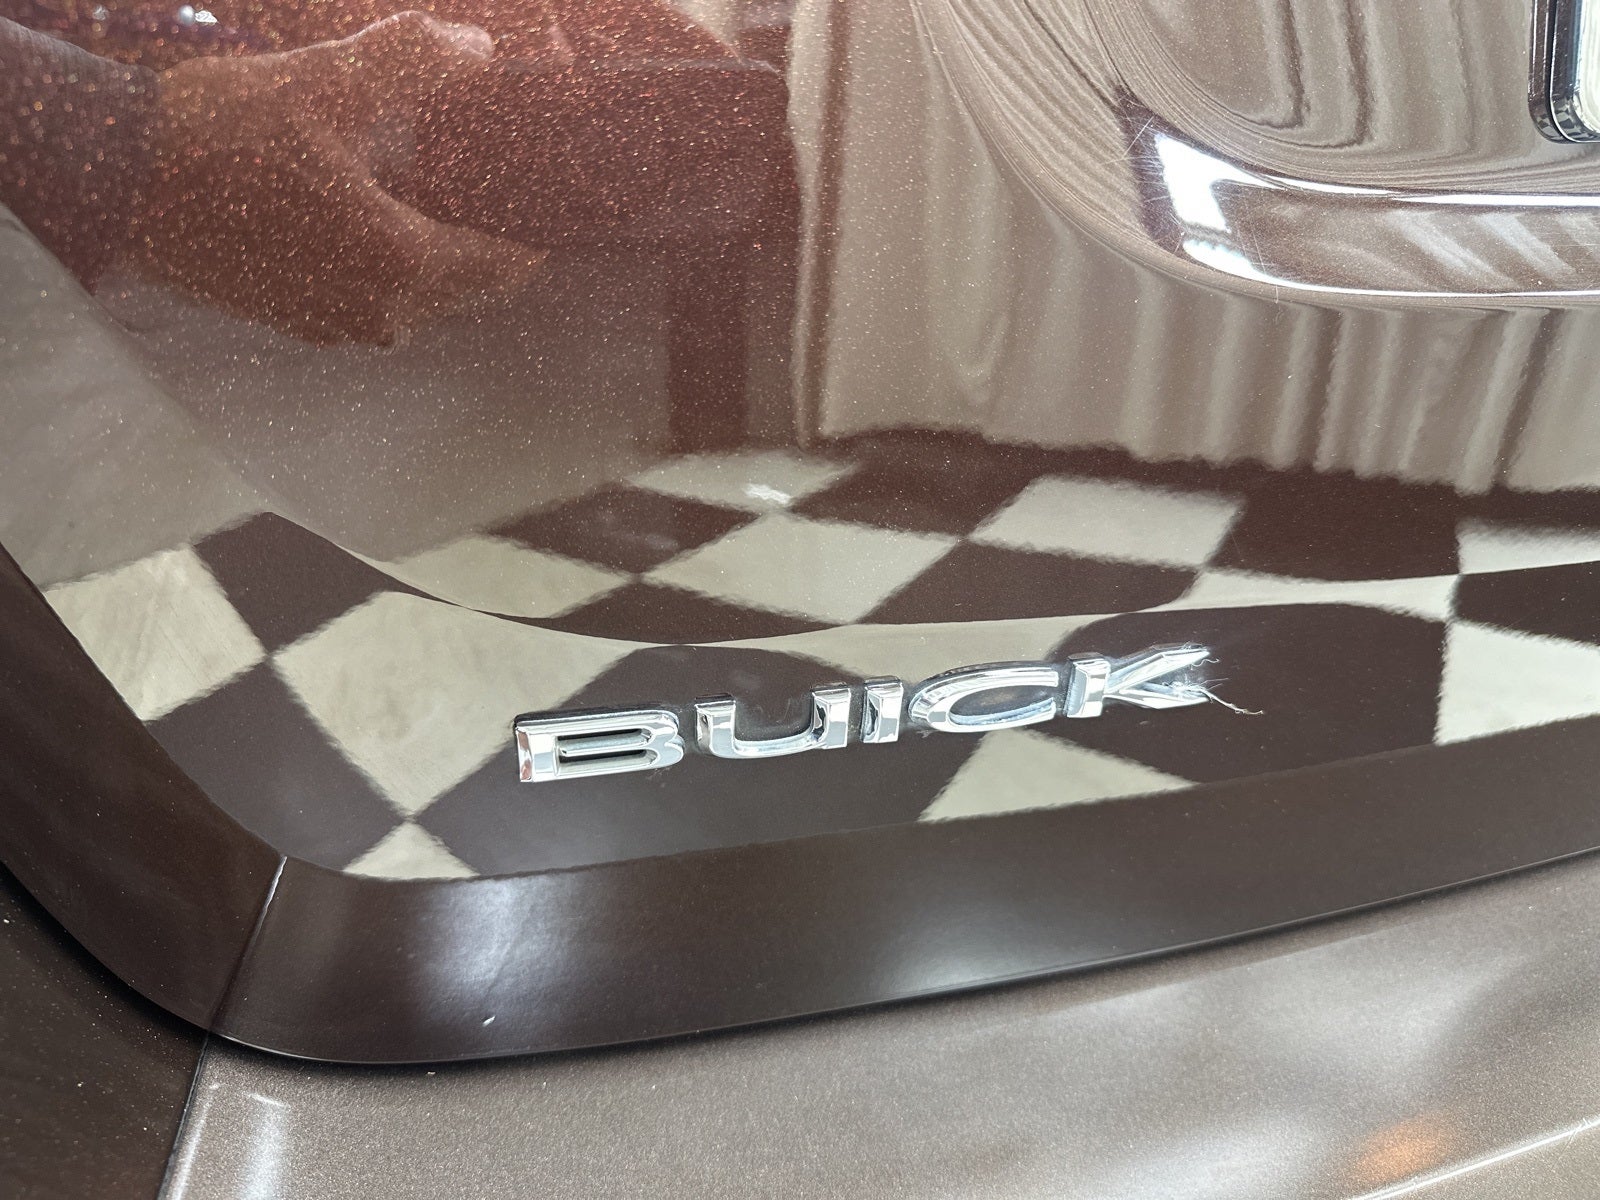 2016 Buick Encore Convenience